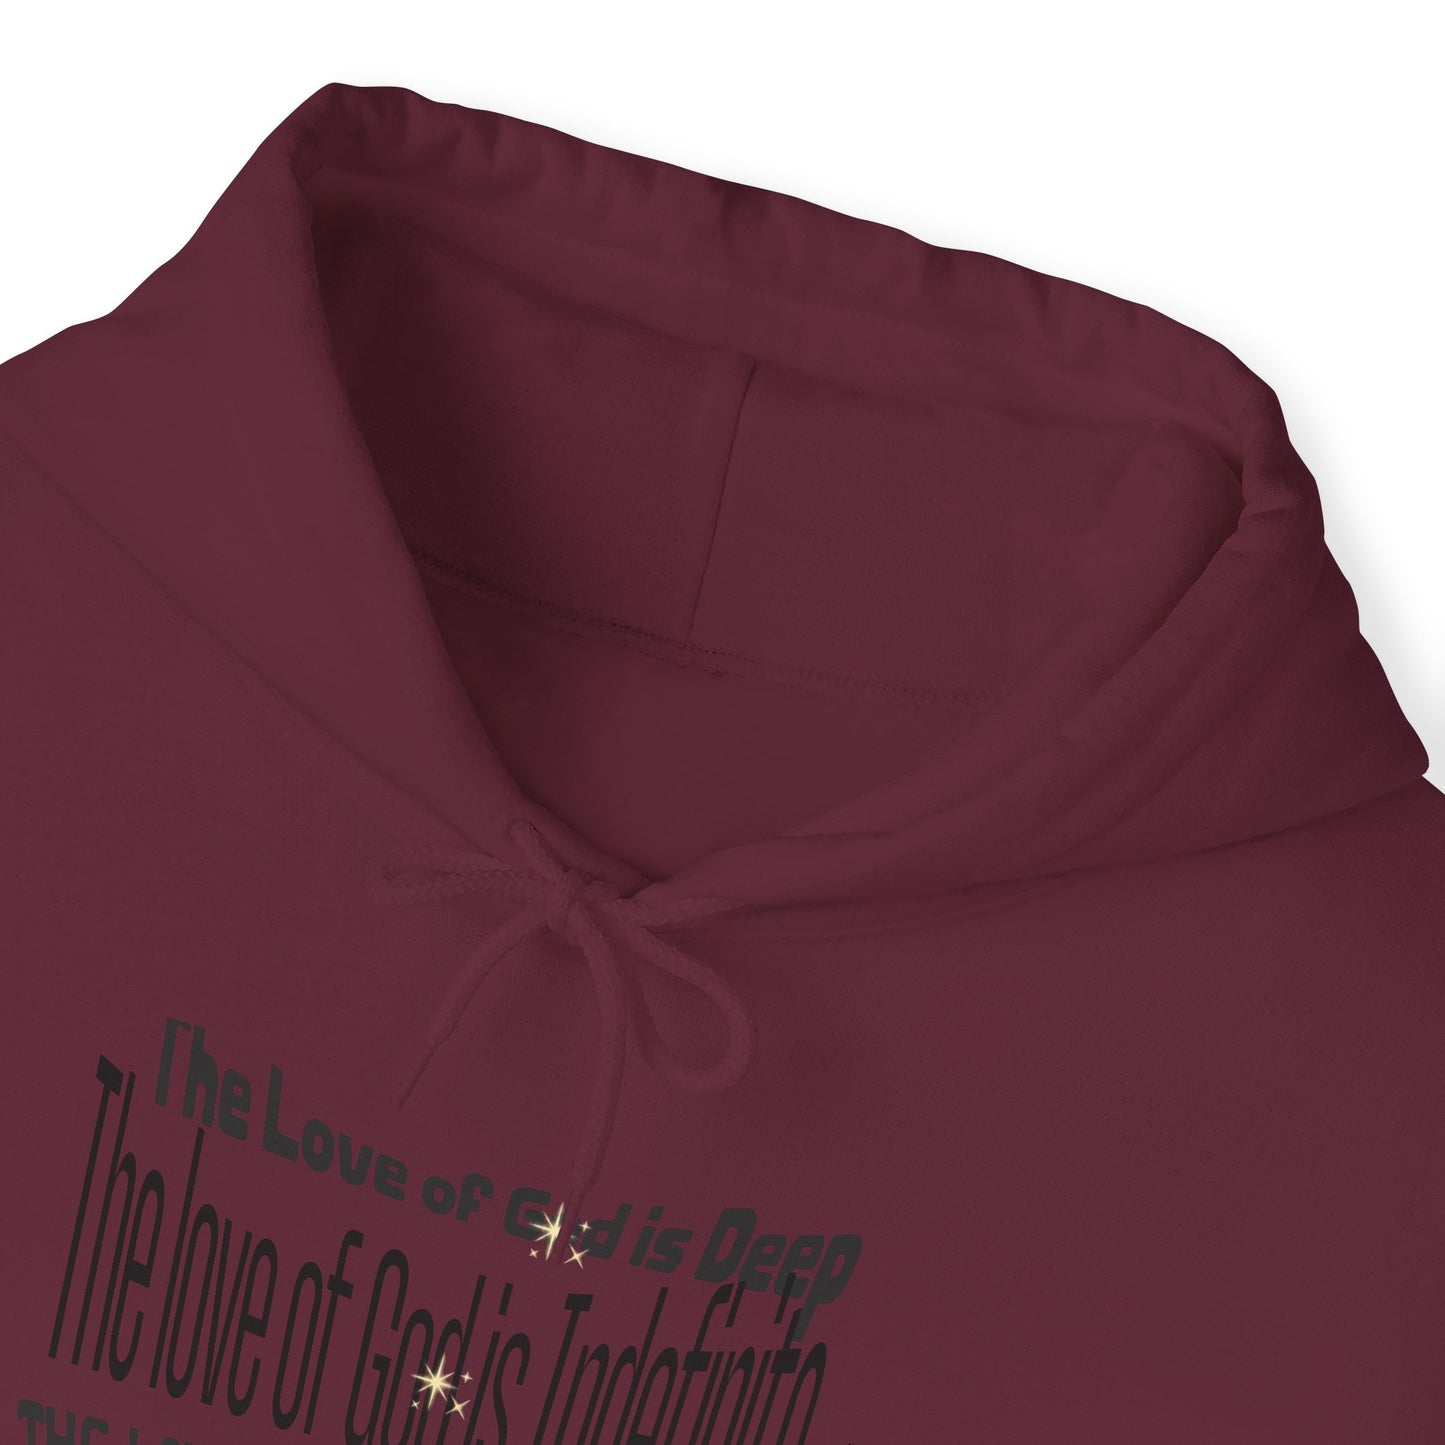 The Love Of God Hooded Sweatshirt, Gift for best friend, best Easter gift